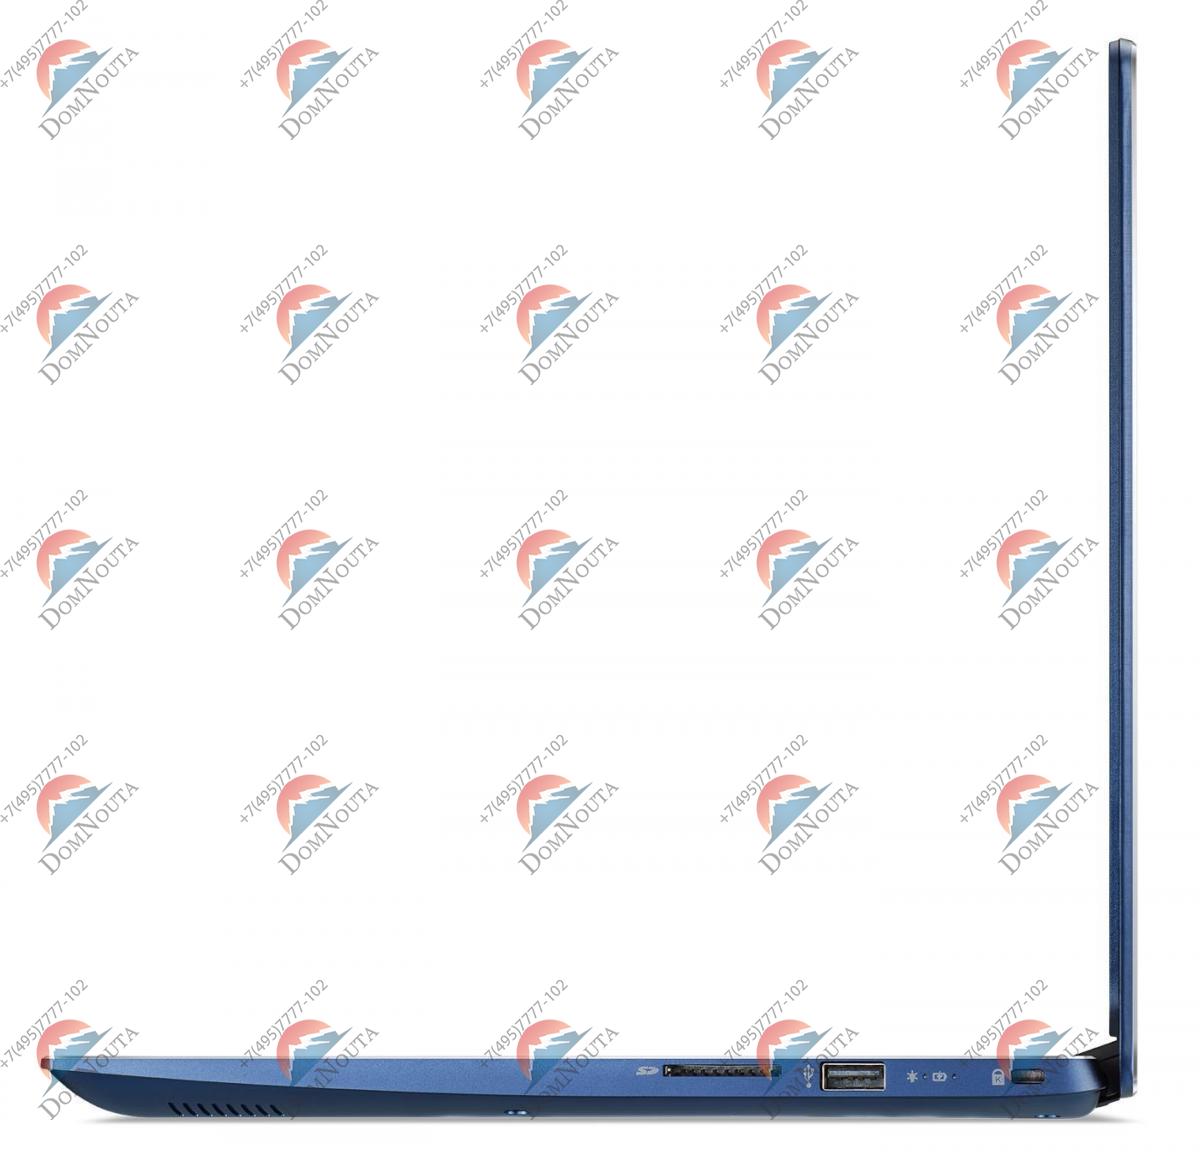 Ноутбук Acer Swift 3 SF314